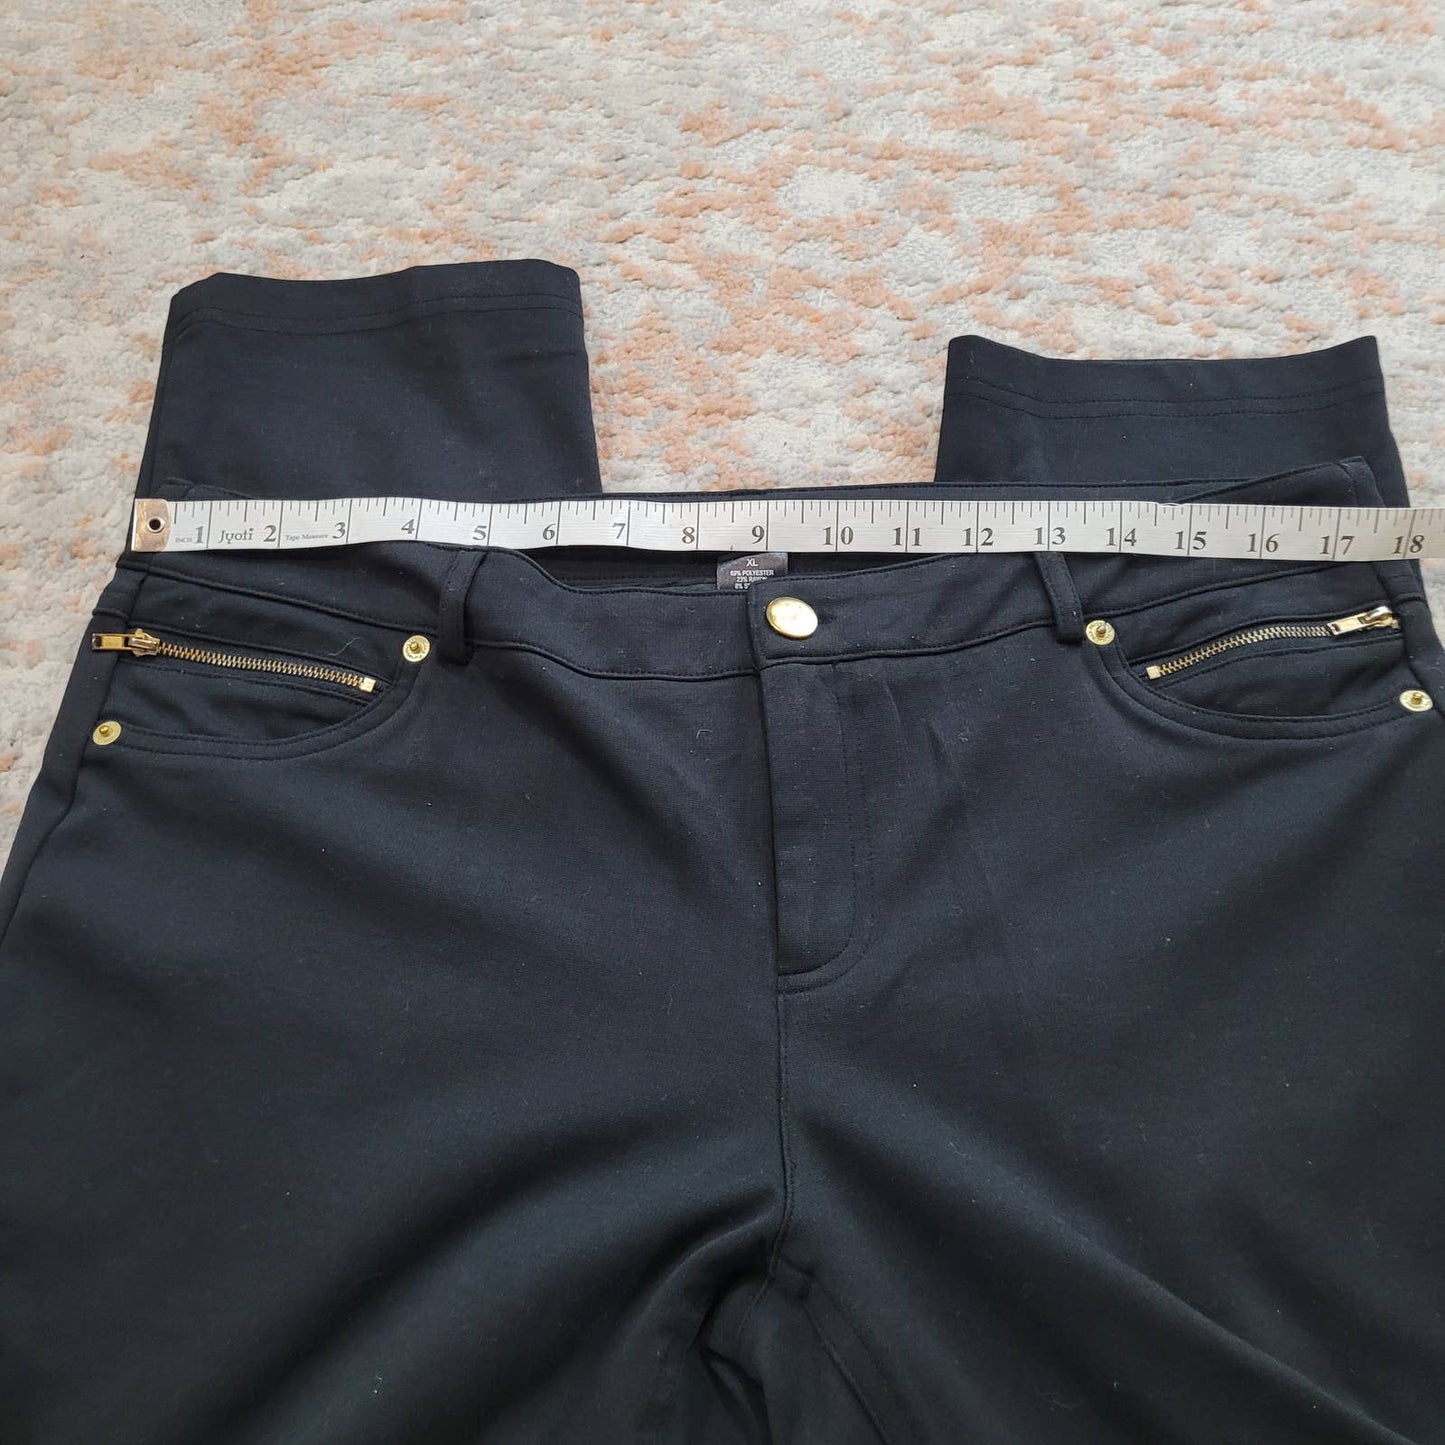 Flirtatious Black Pants - Size Extra LargeMarkita's ClosetFlirtatious